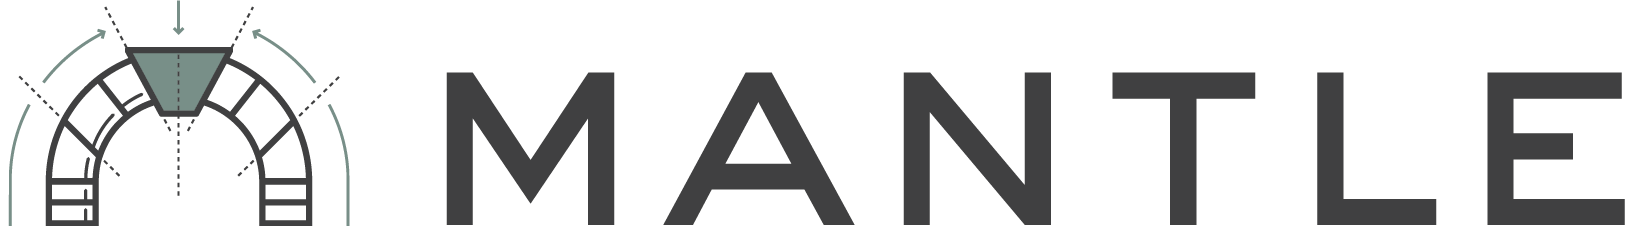 Mantle Horizontal Header Logo